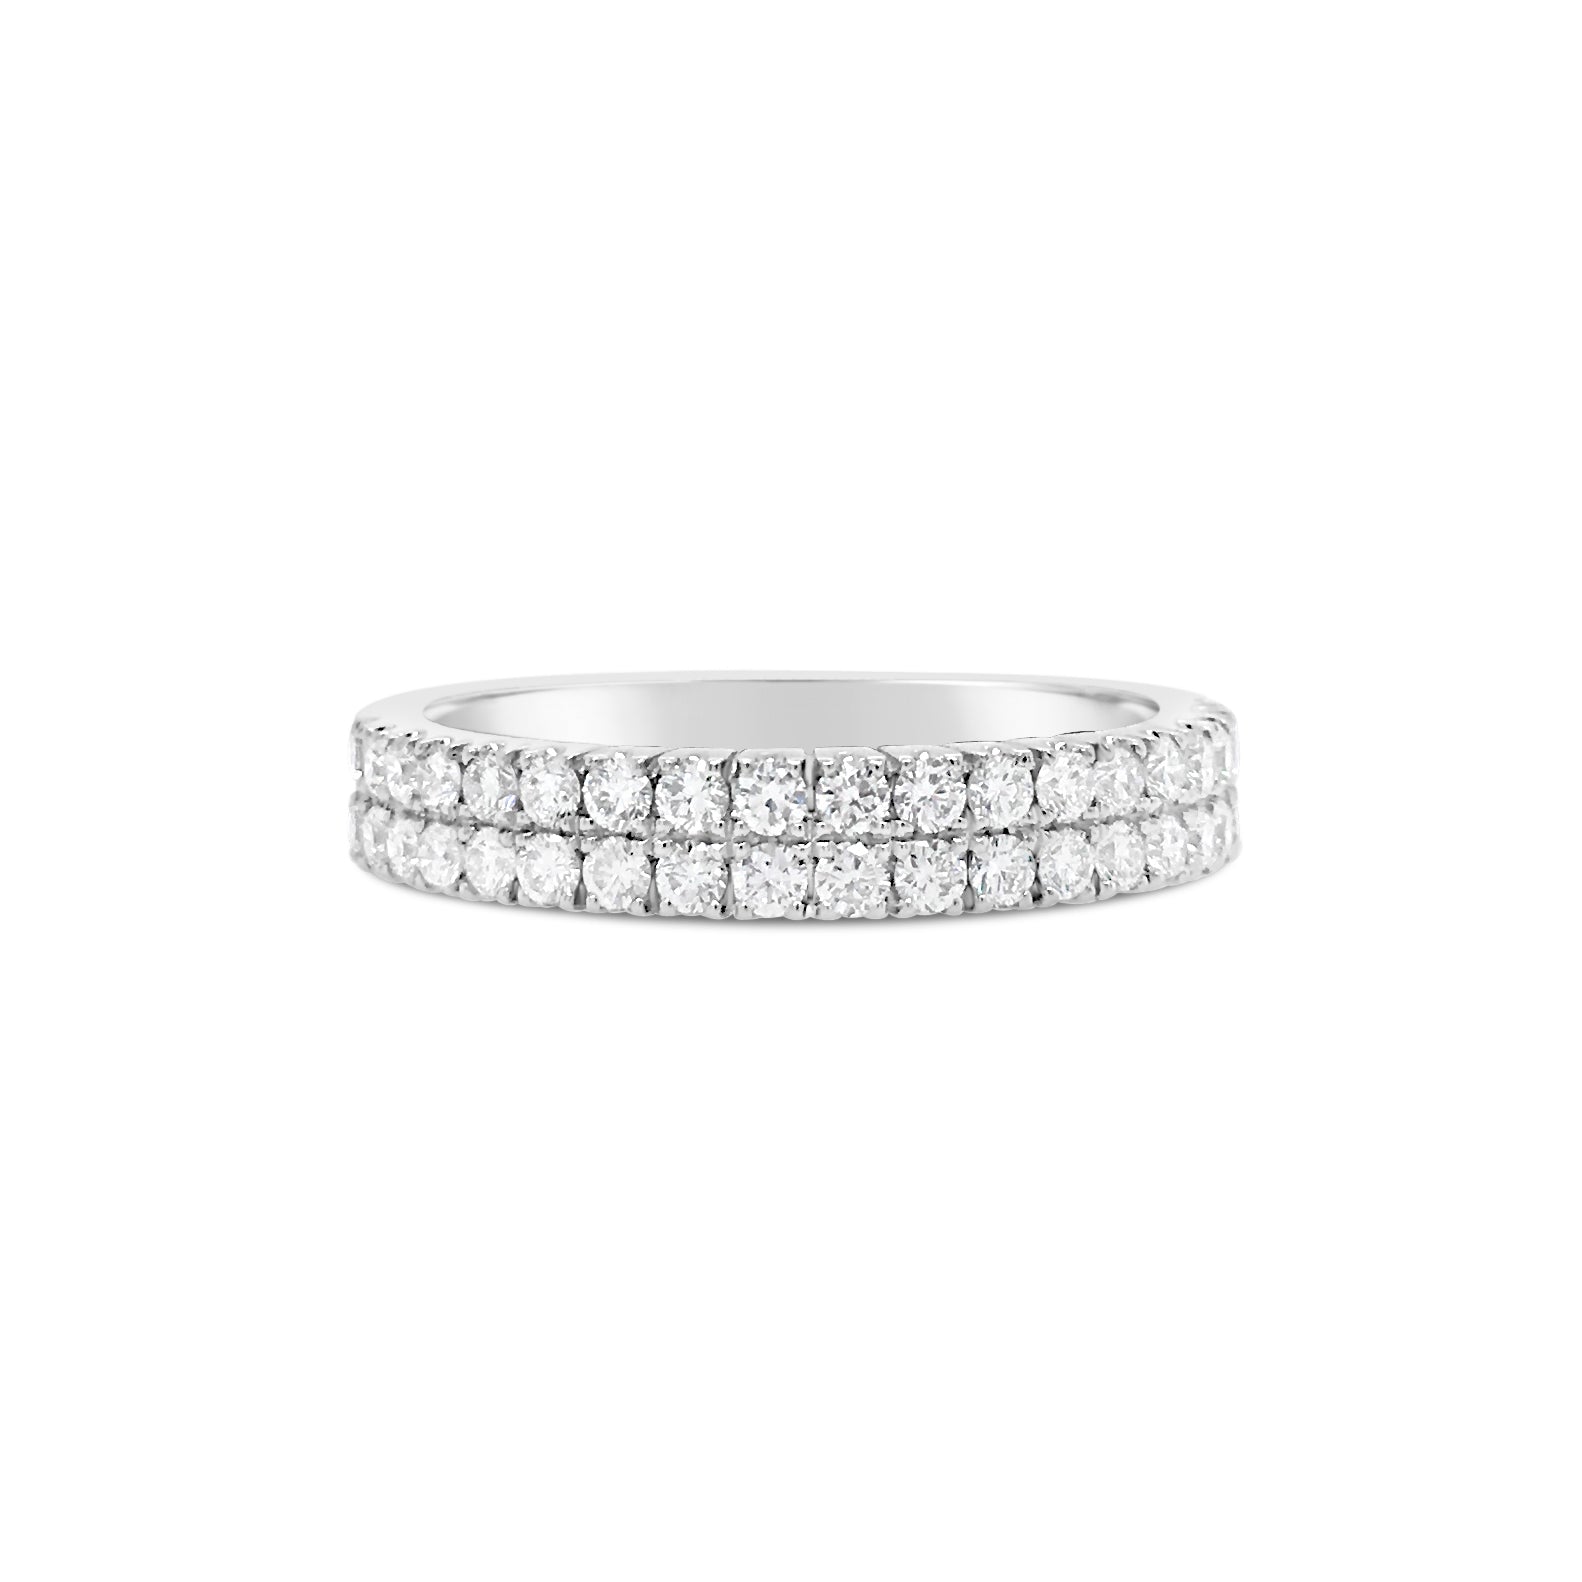 Double-Row Diamond Wedding Band -18k white gold weighing 3.37 grams -58 round diamonds weighing .92 carats